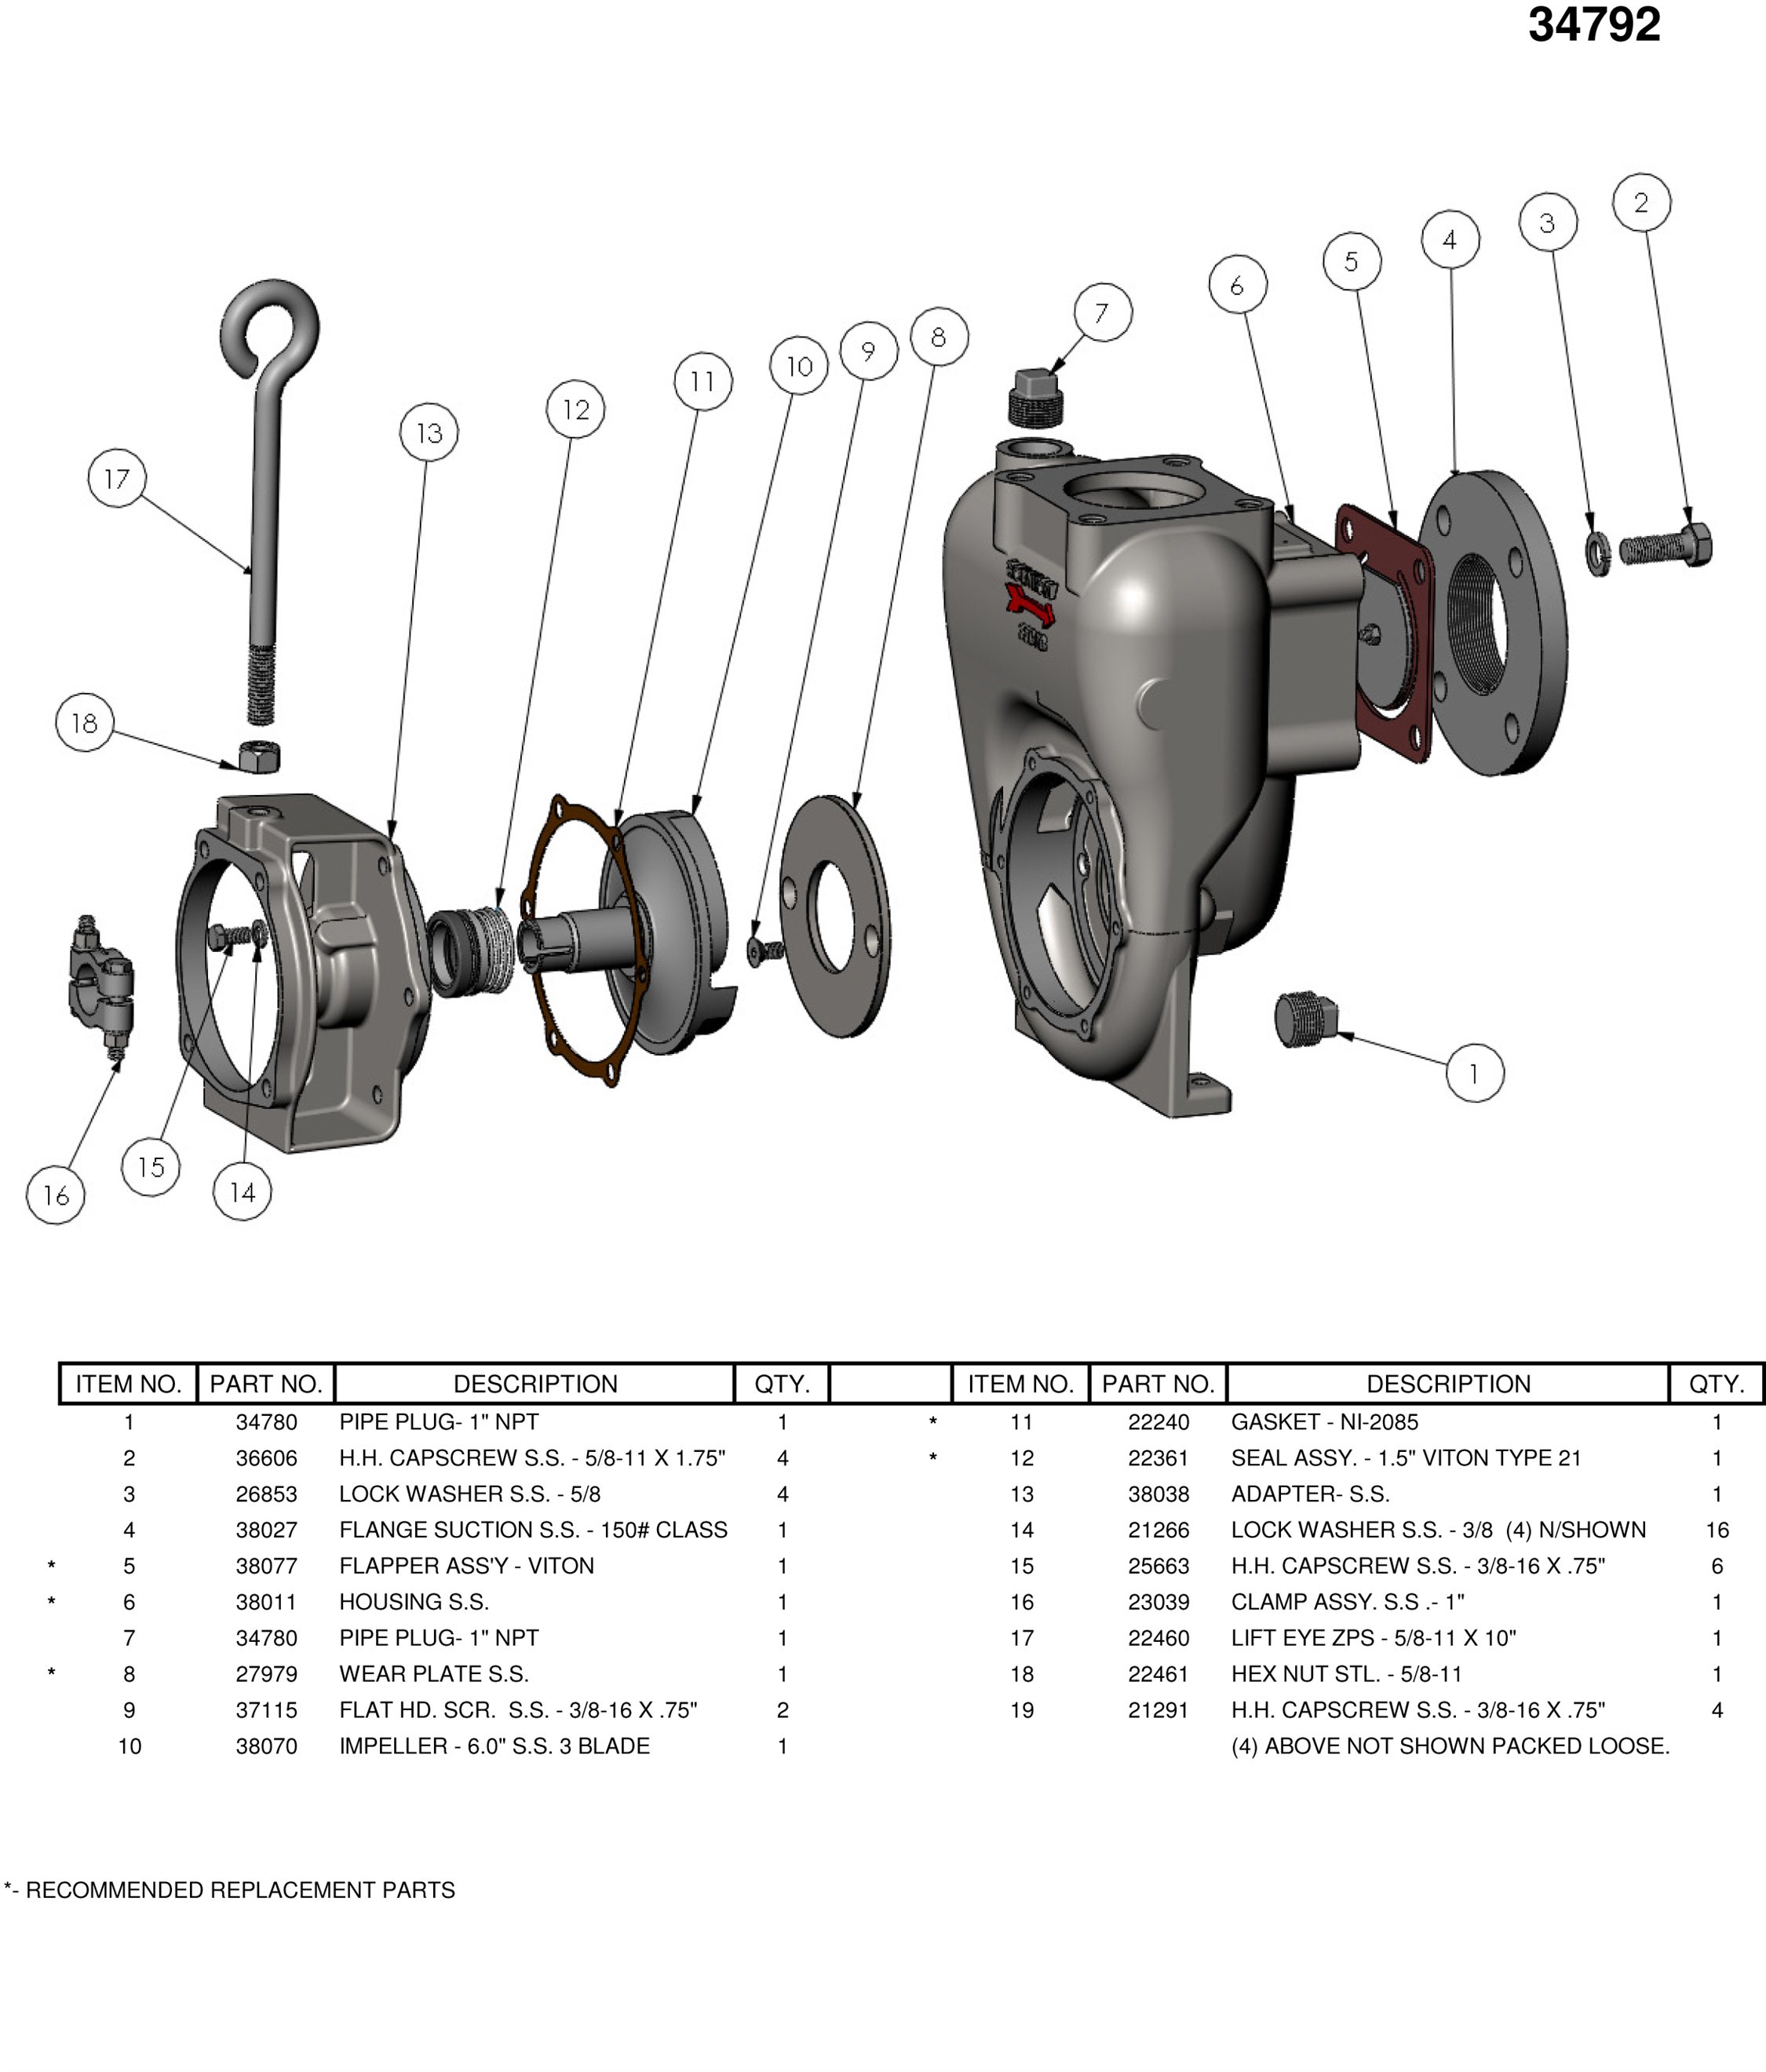 flomax-15-316-ss-hydraulic-industrial-vacuum-pump_parts-list-34792